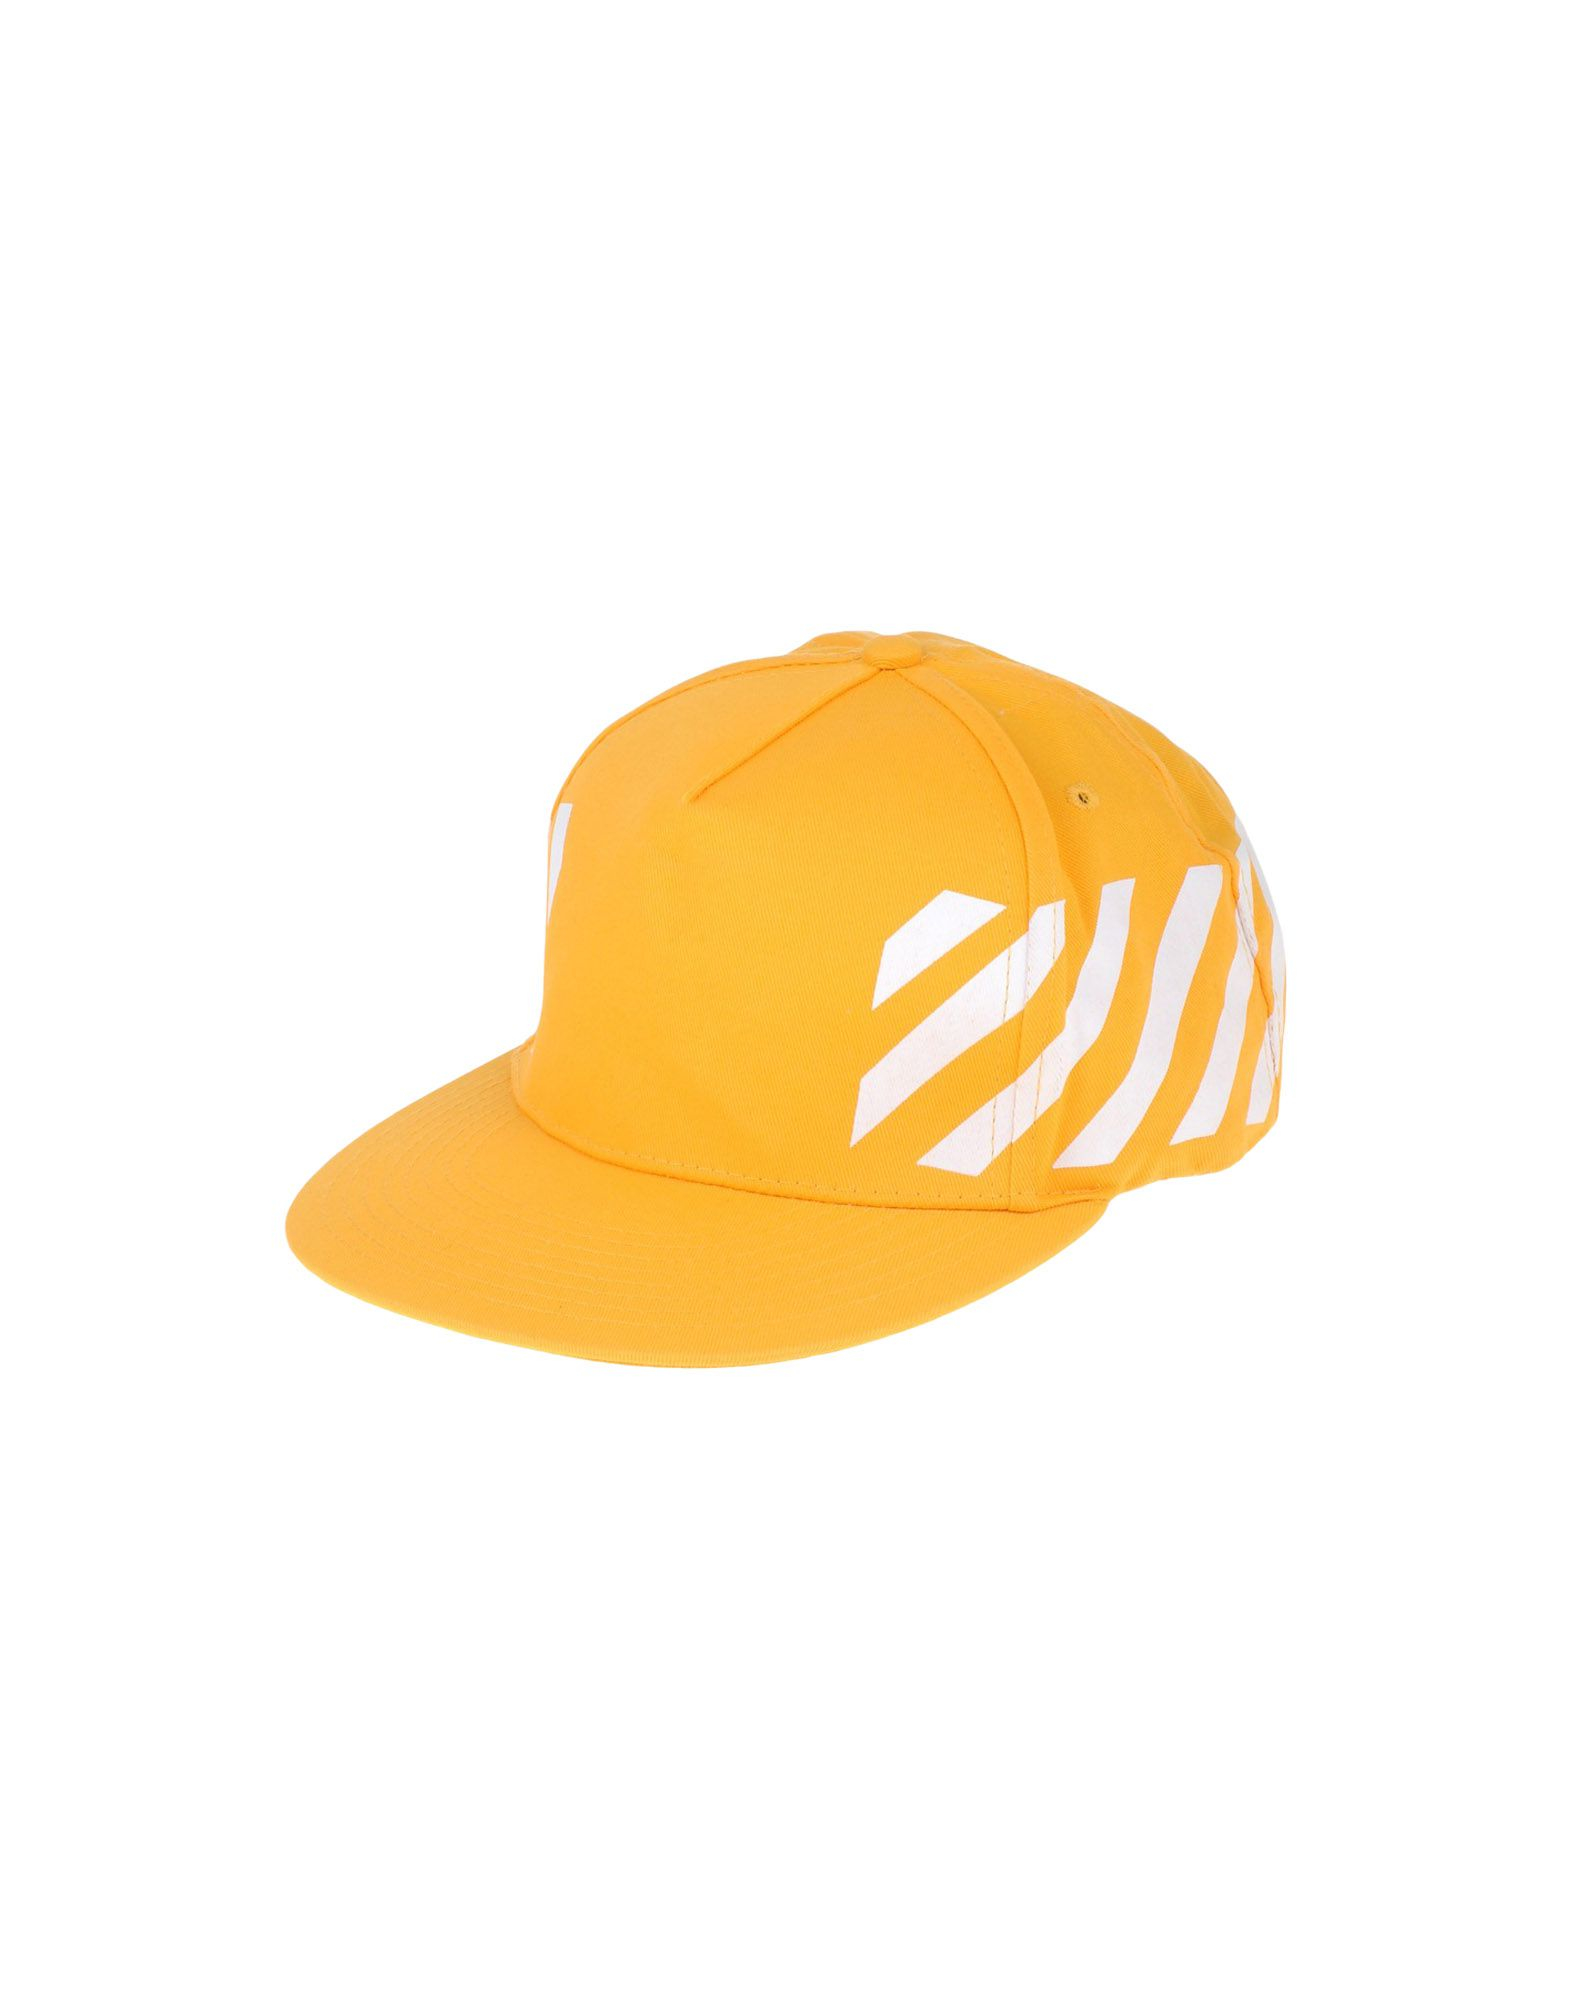 Off-White c/o Virgil Abloh Hat in Yellow for Men - Lyst